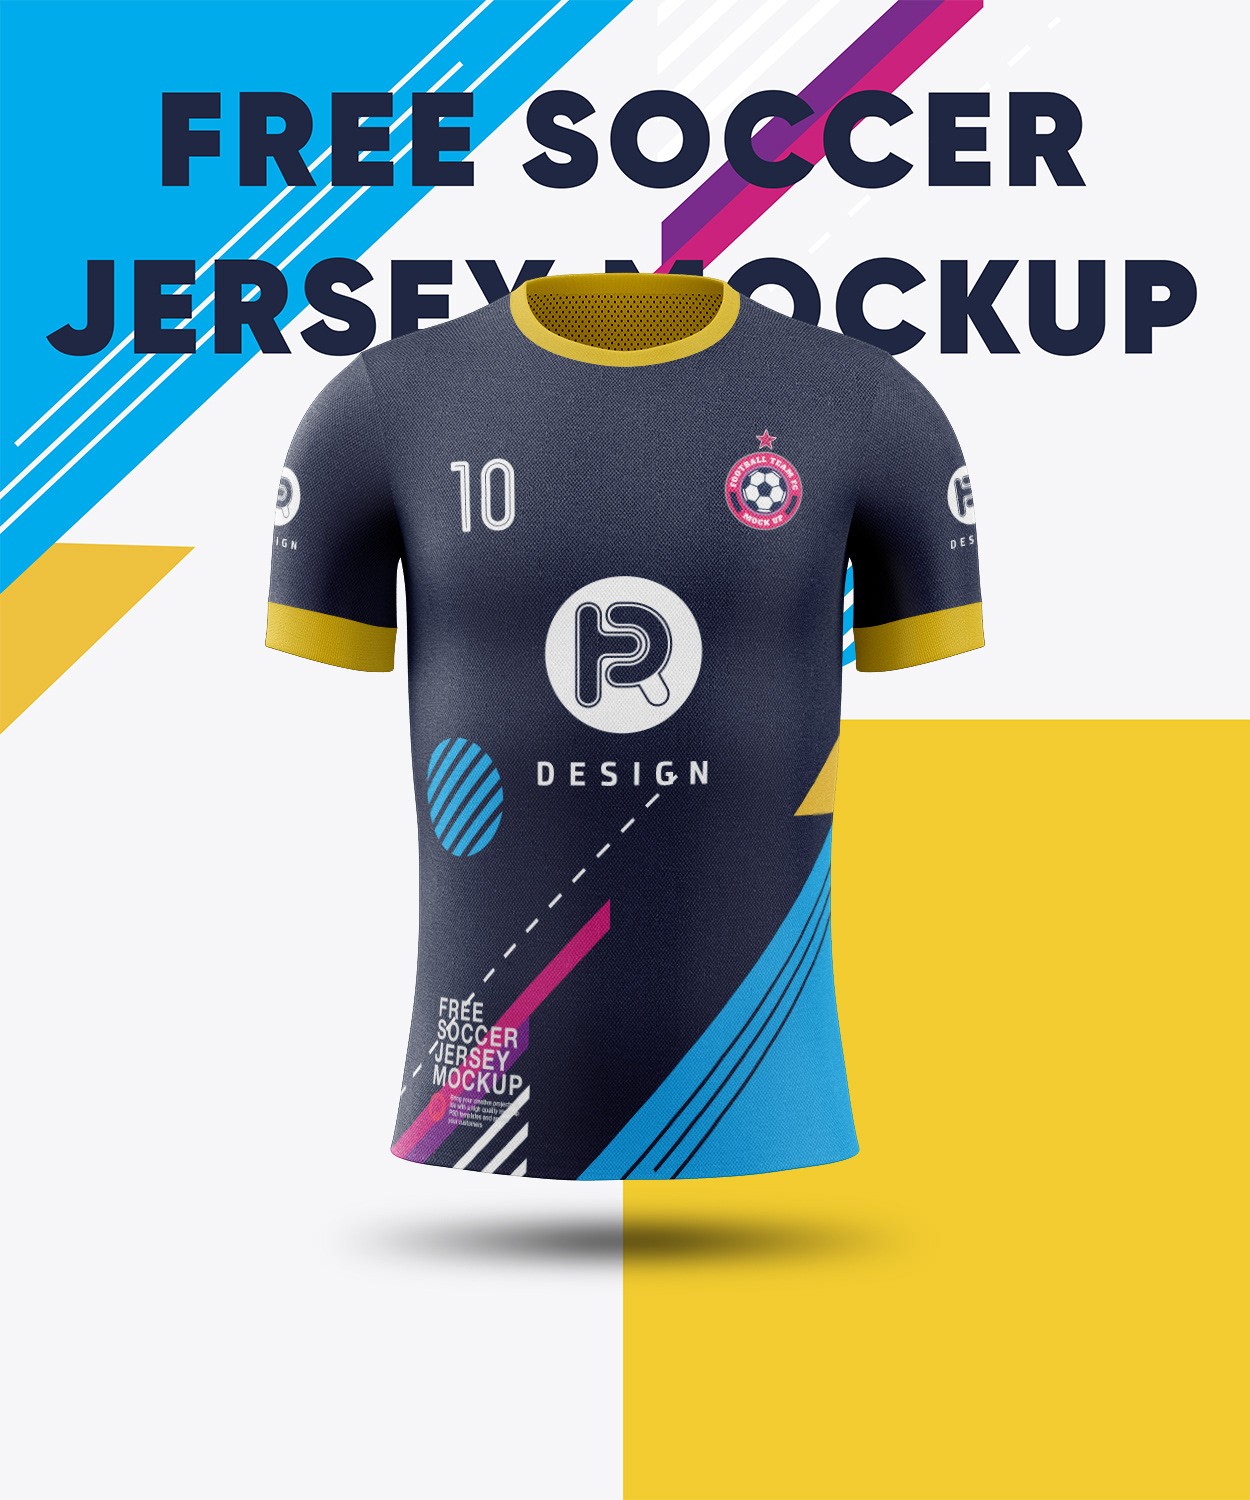 Download Free Soccer Jersey Mockup - Free Mockup Download